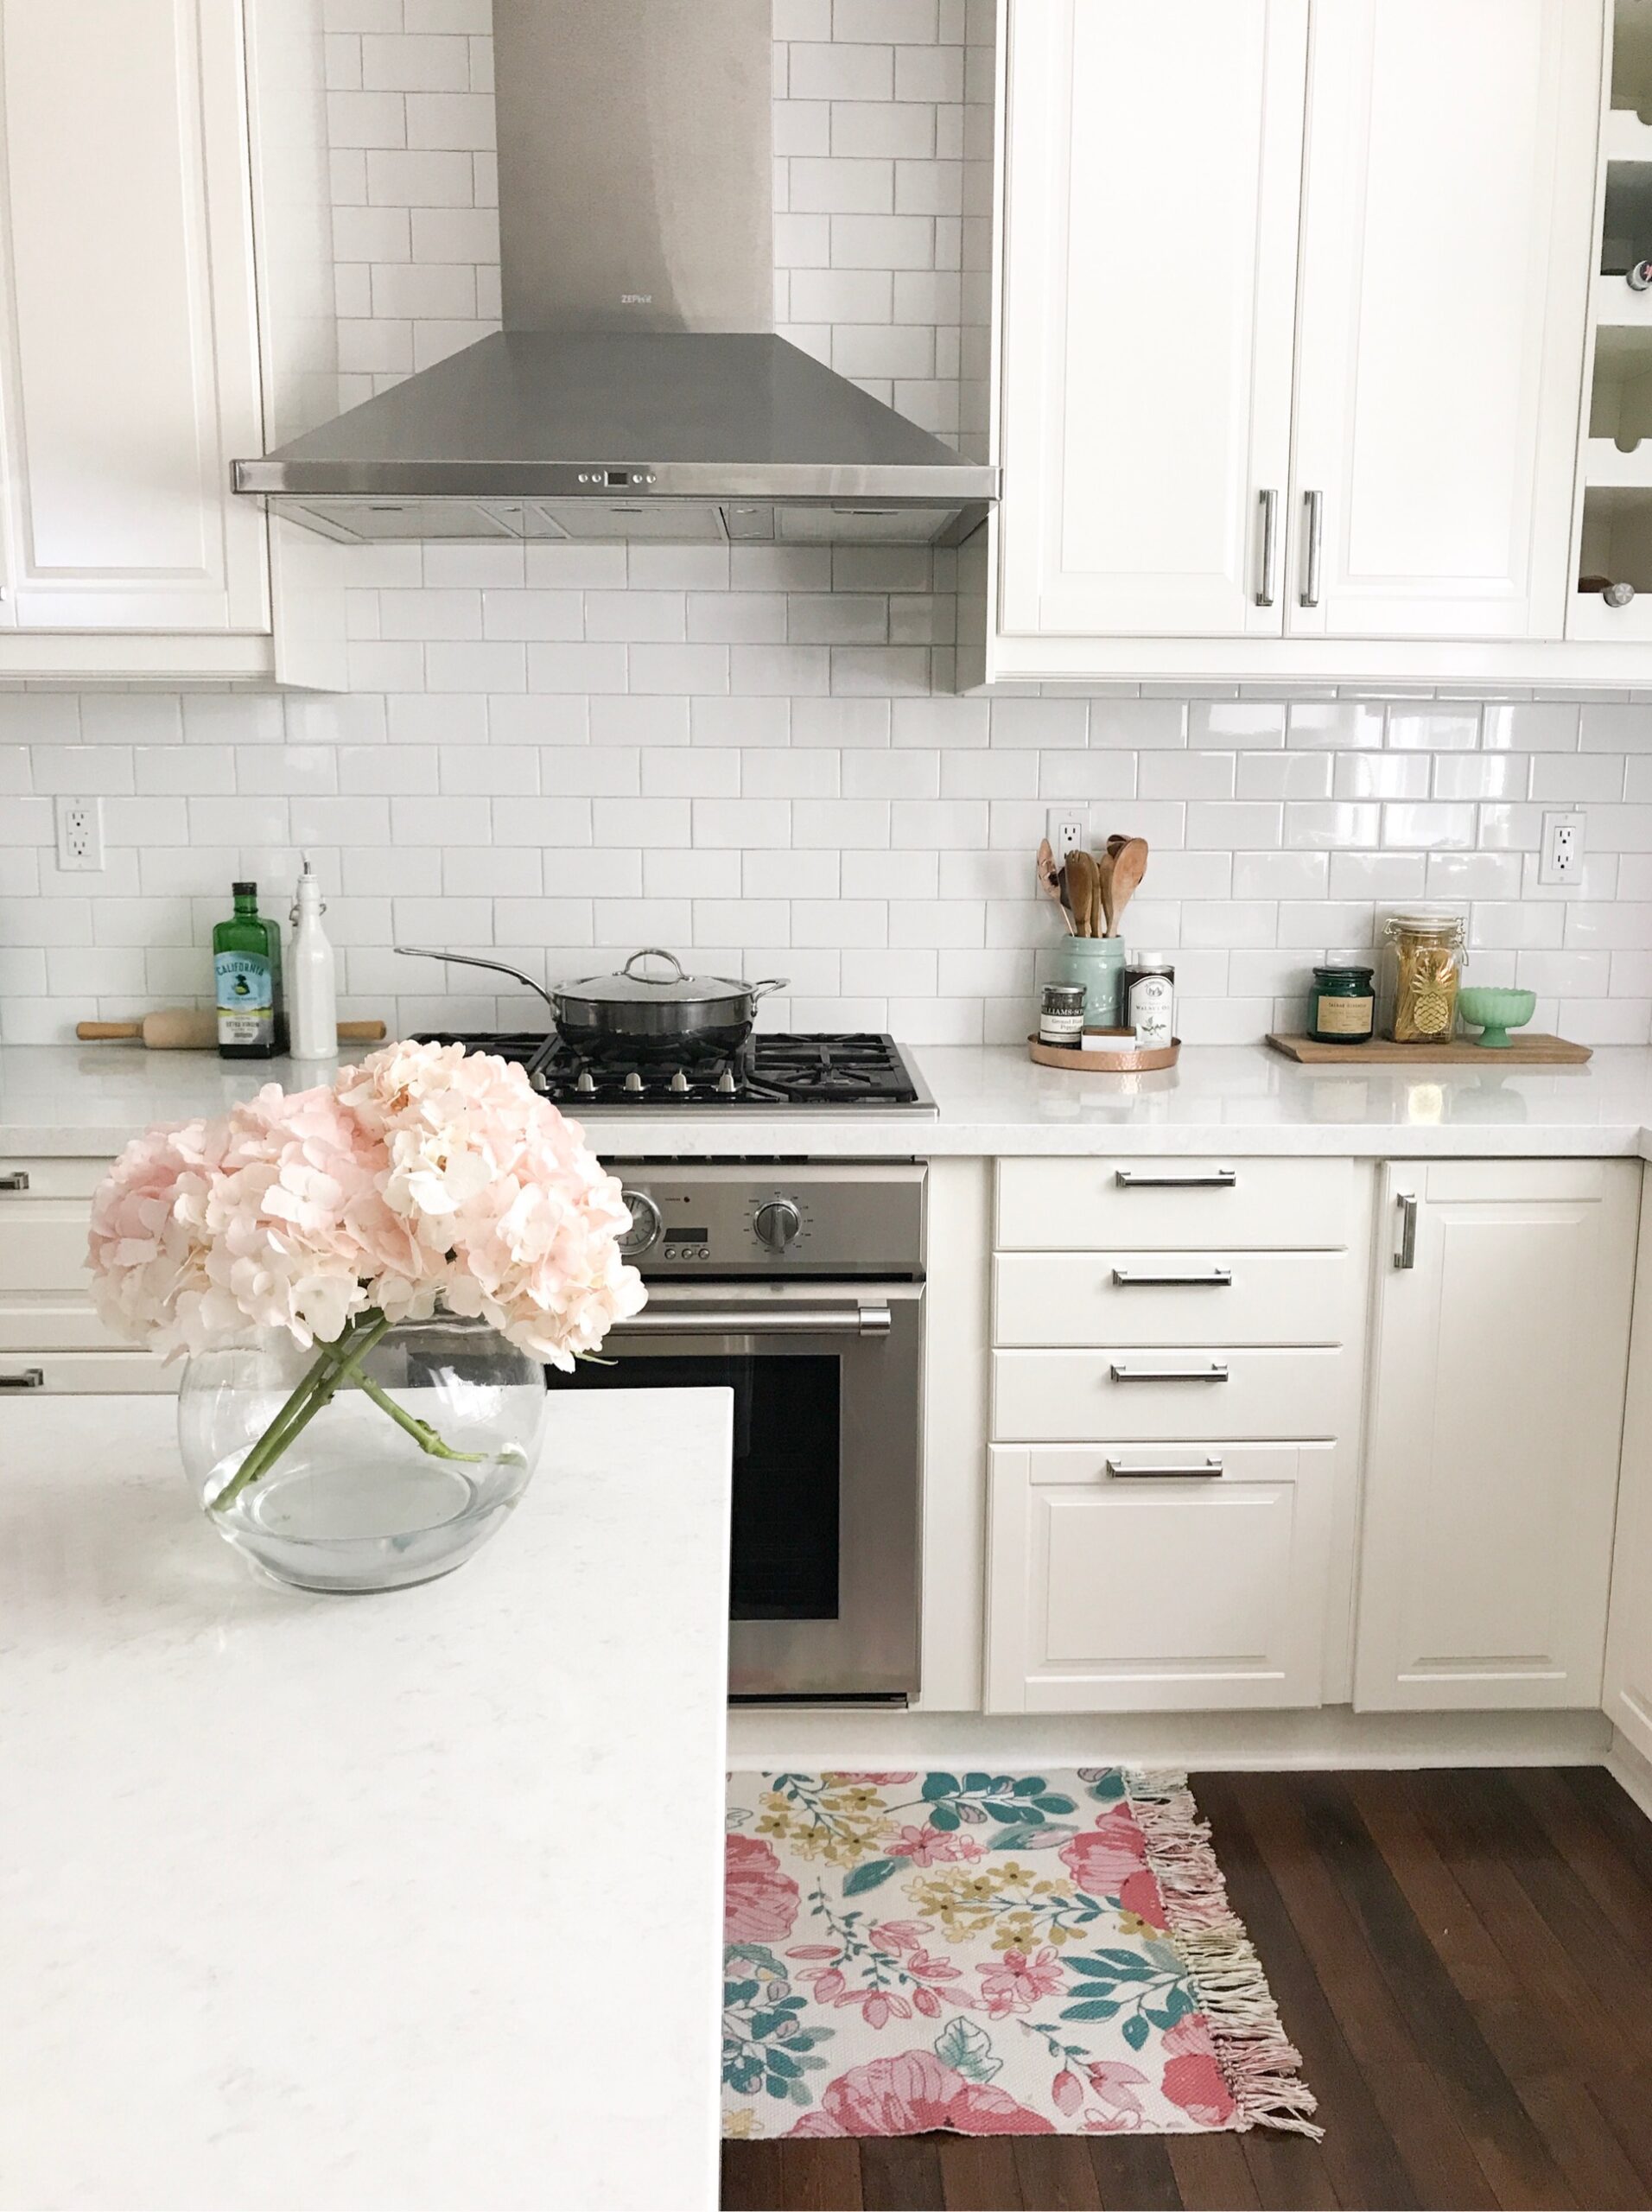 https://1111lightlane.com/wp-content/uploads/2017/06/White-bright-modern-real-life-beautiful-inspirational-IKEA-kitchen-1111lightlane-scaled.jpg